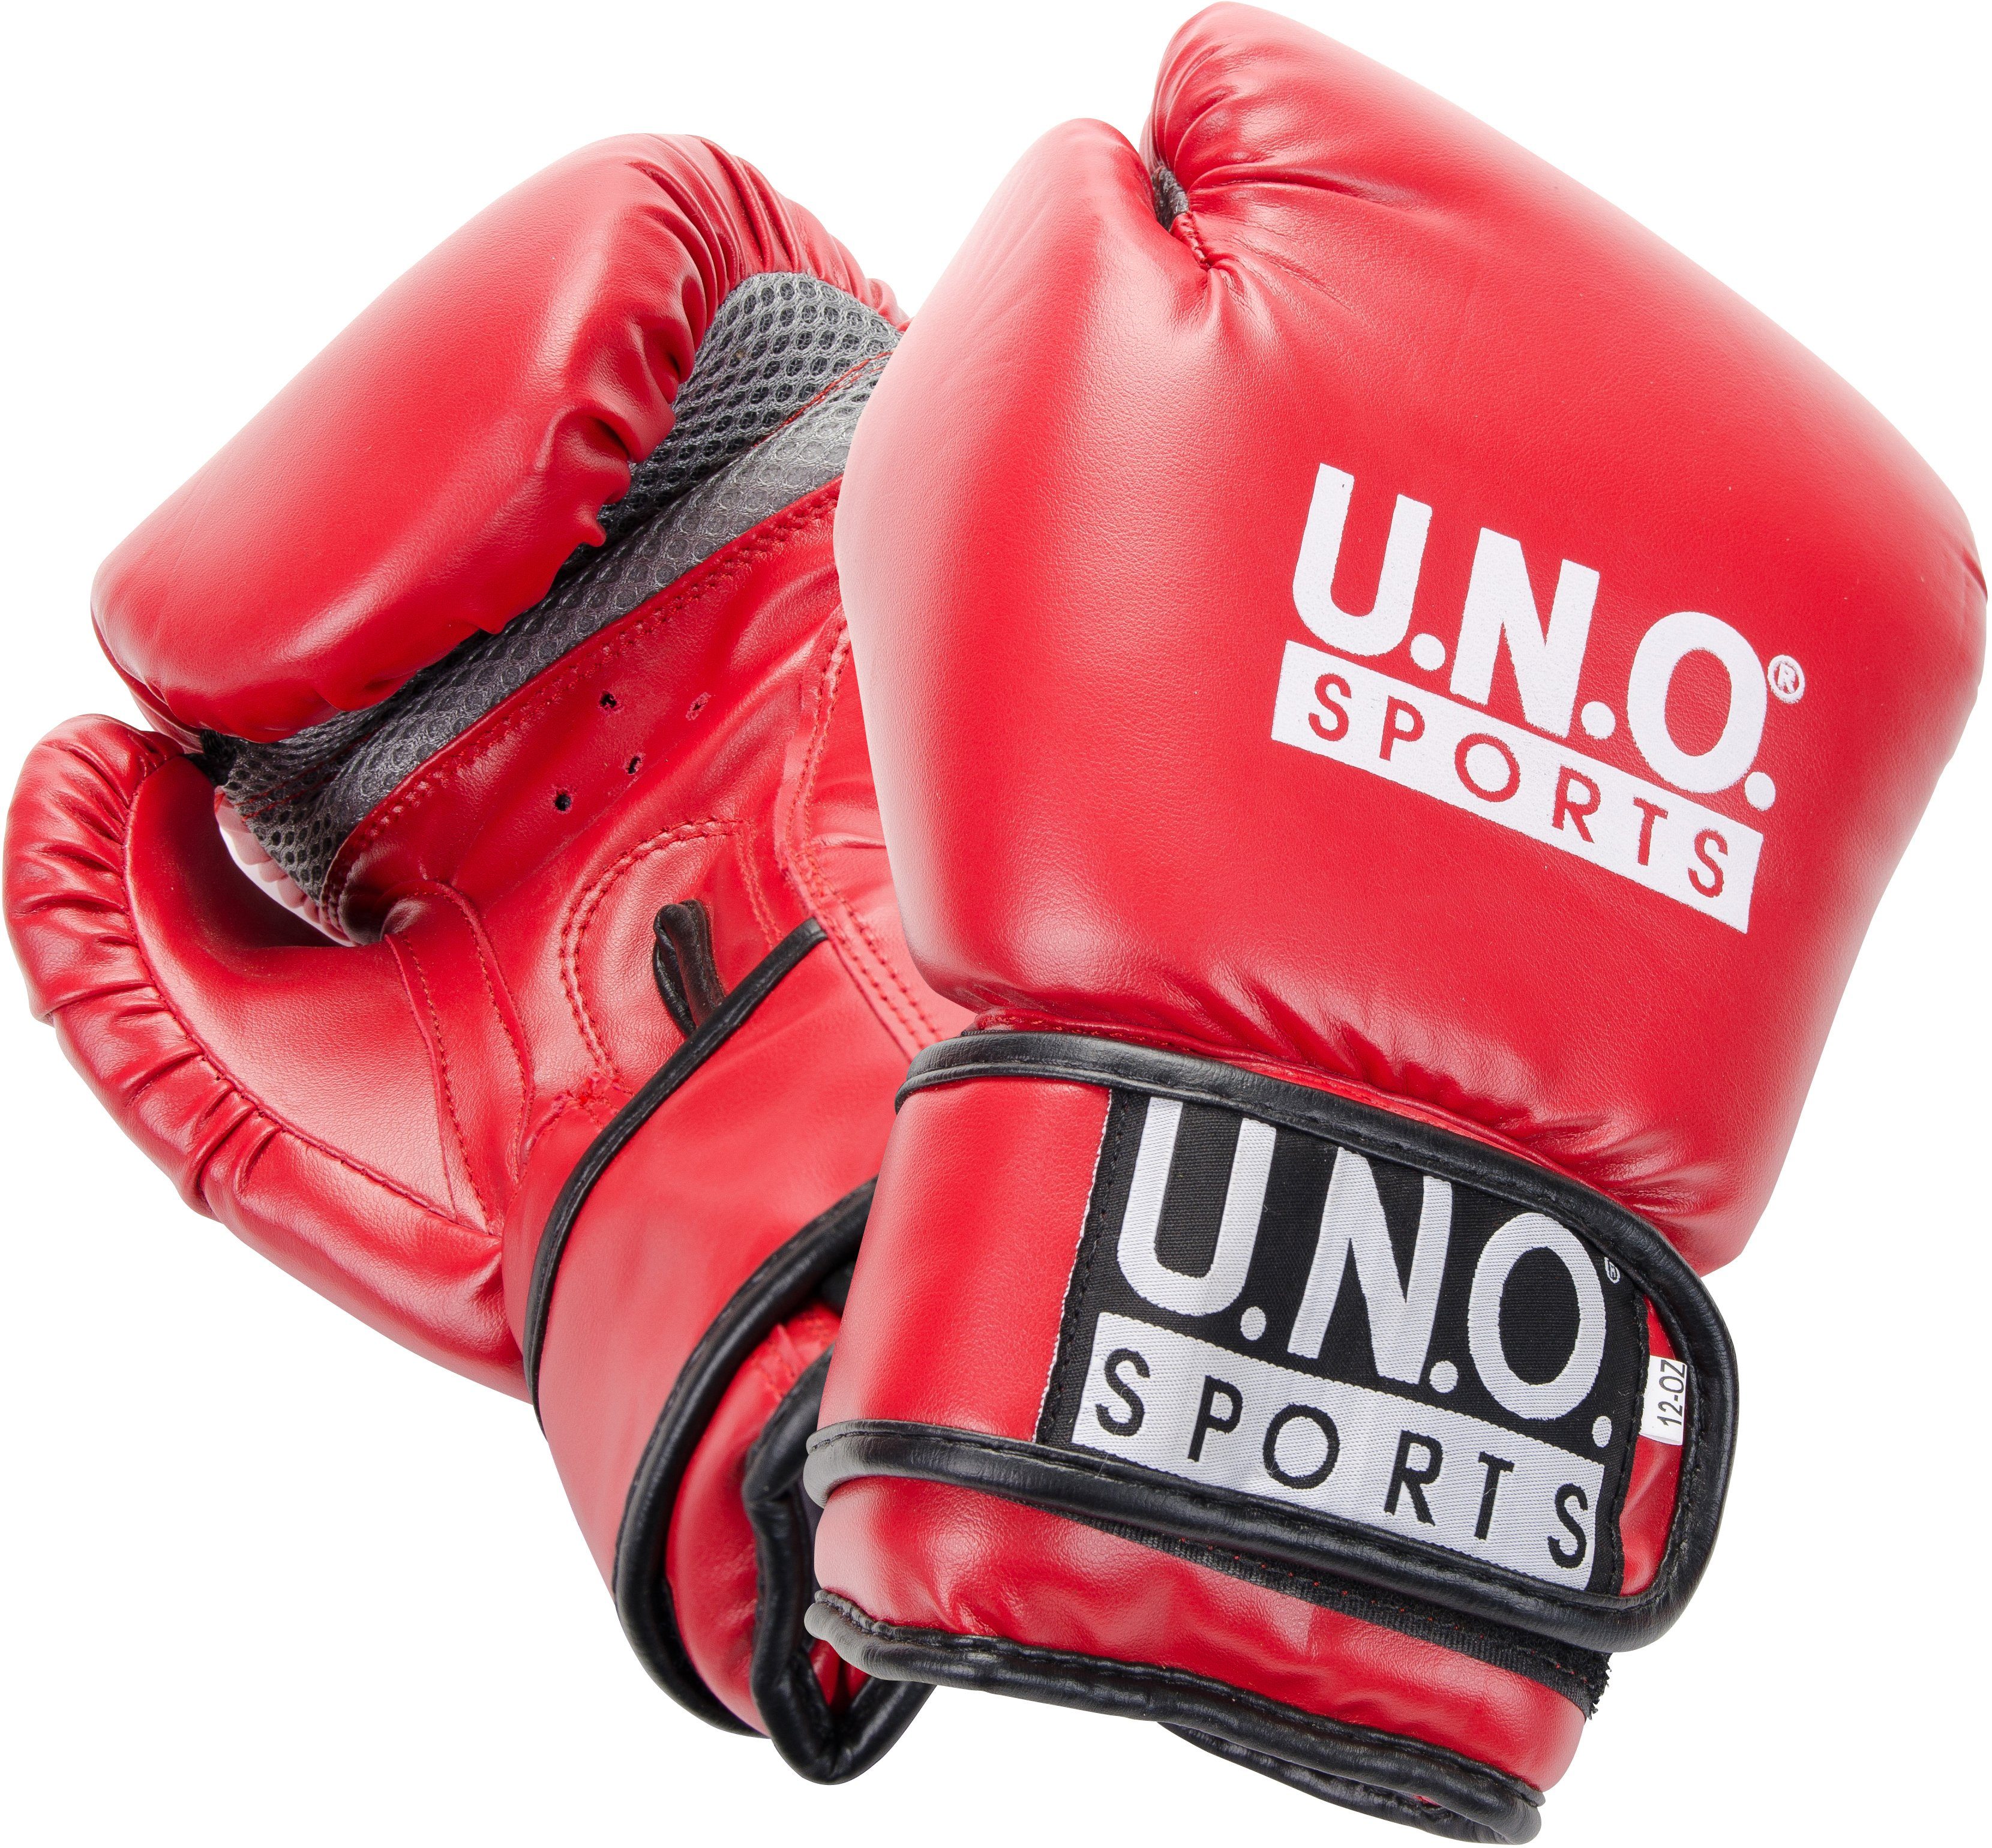 Fun, SPORTS Boxhandschuhe leichtes für Heimtraining U.N.O.